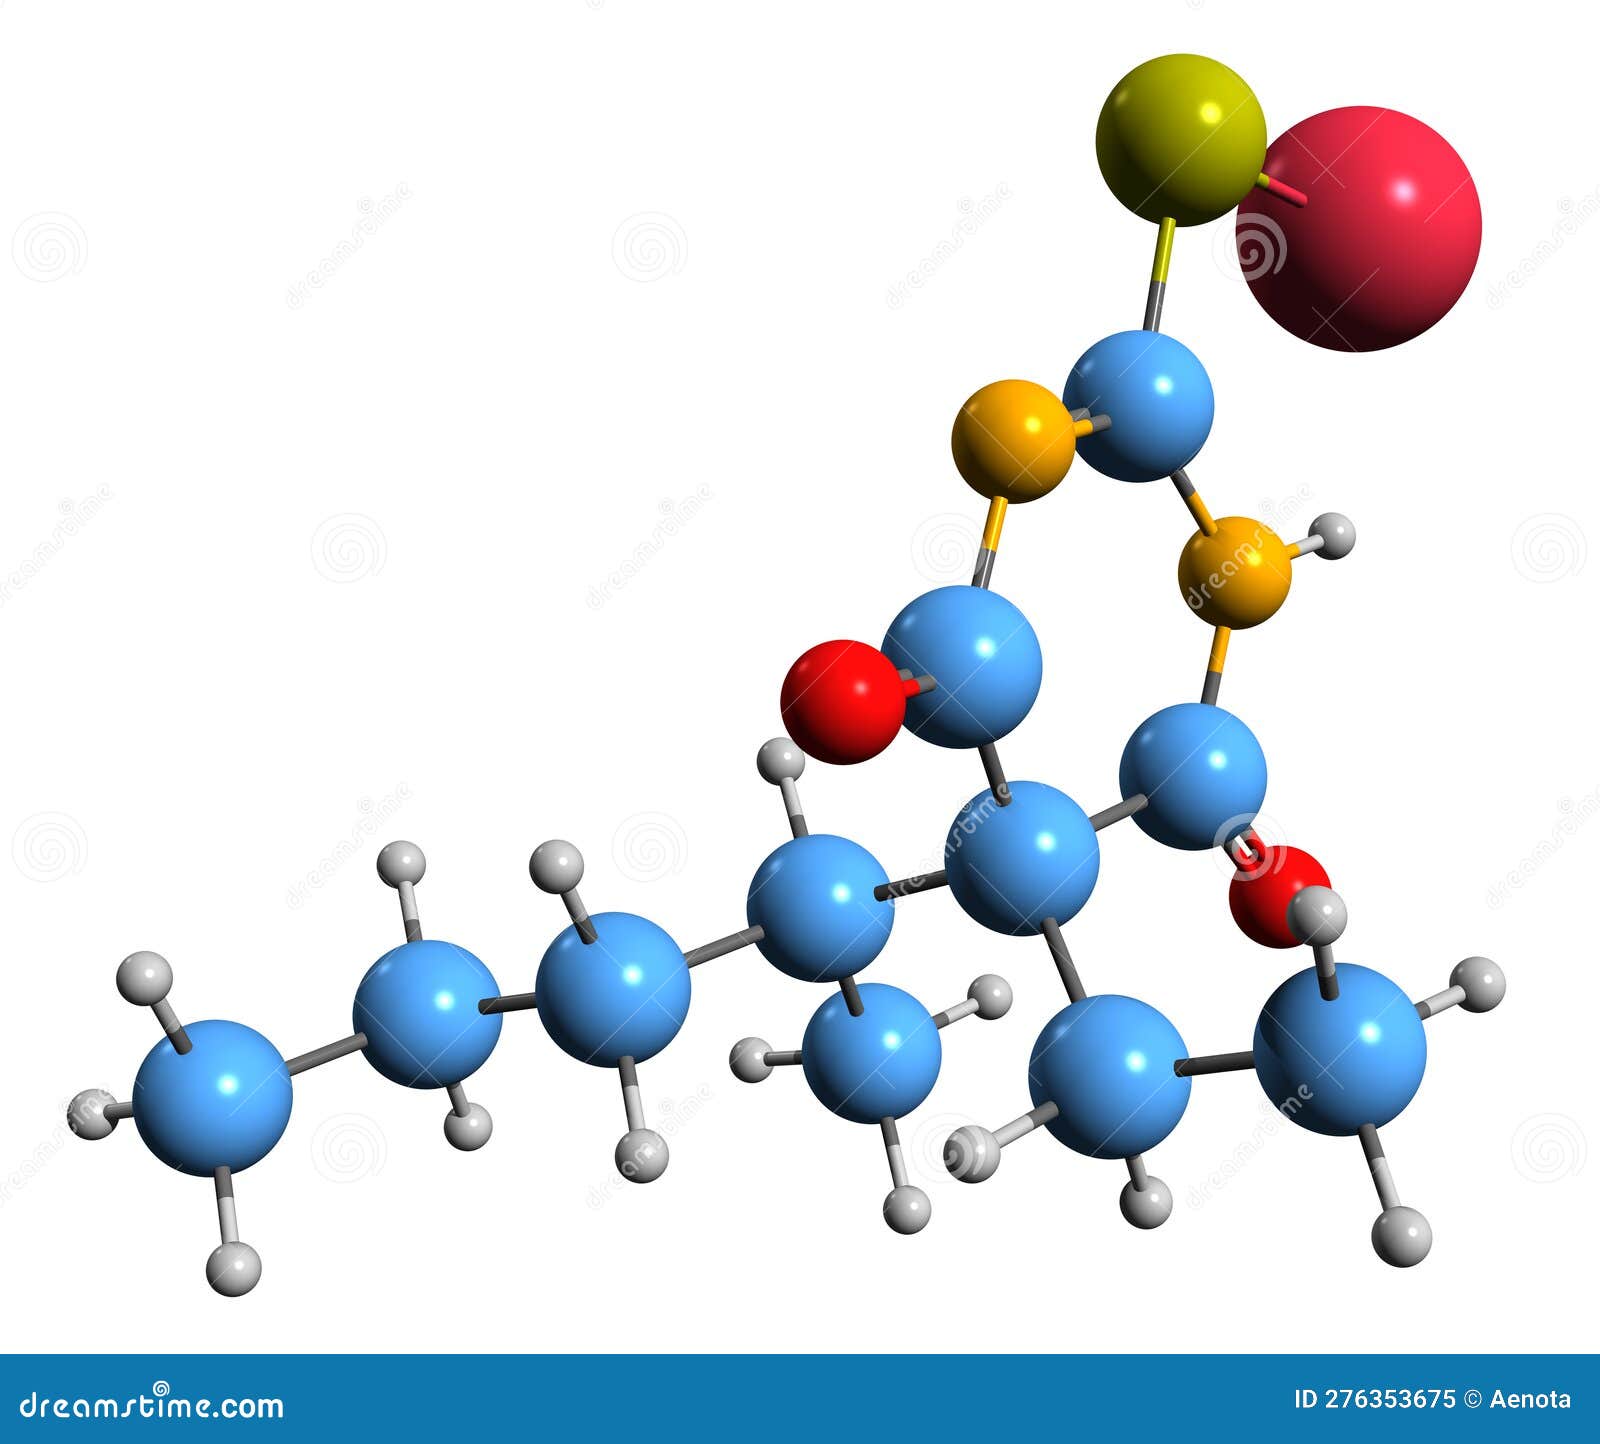 3d image of sodium thiopental skeletal formula